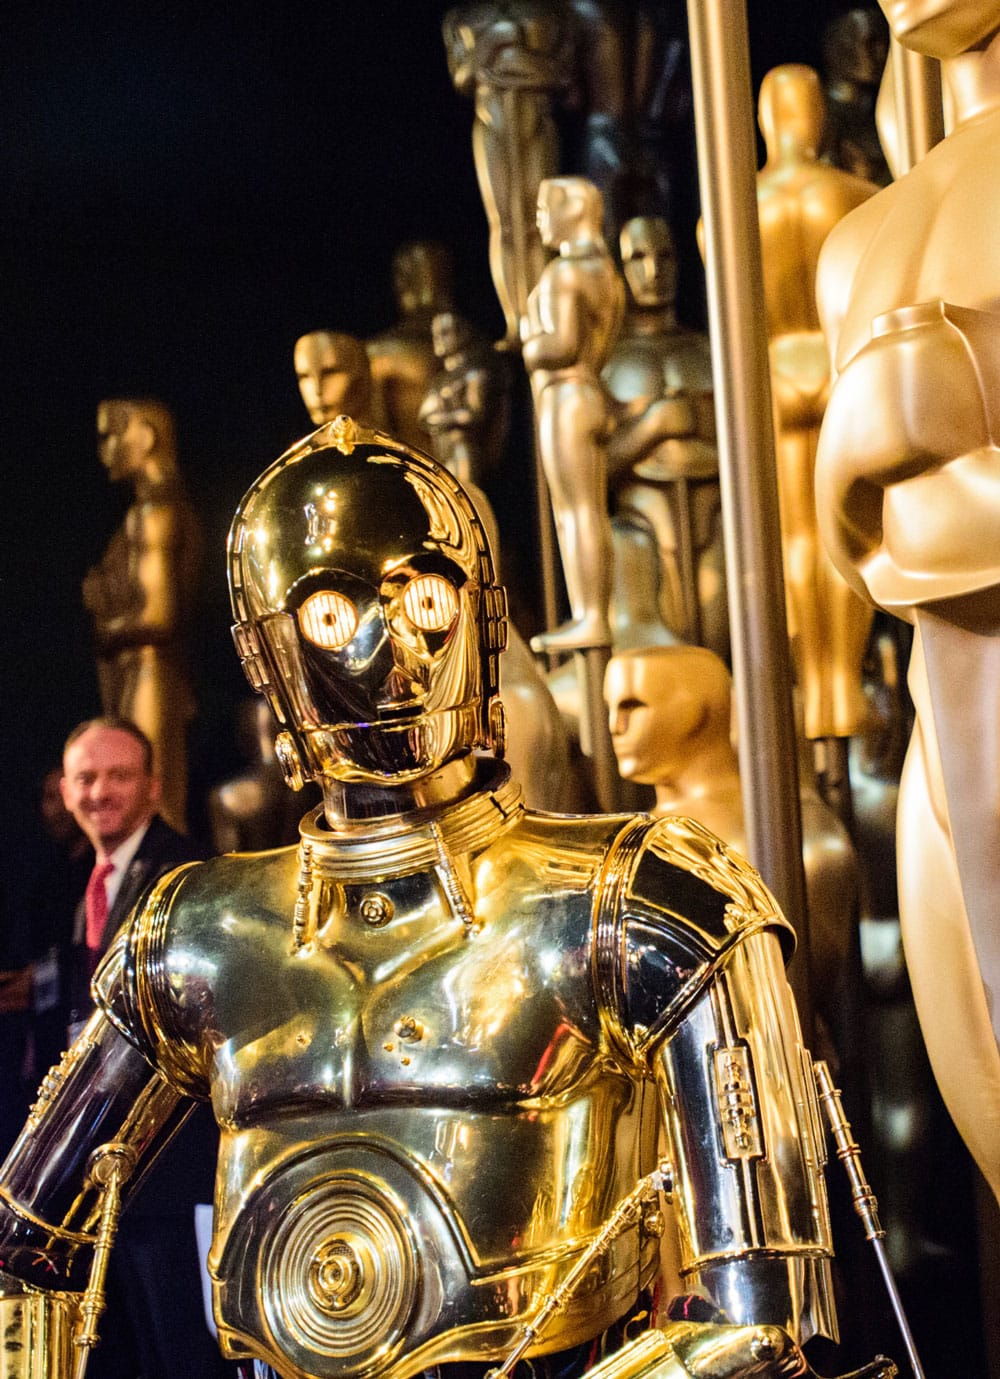 Chris Bartlett as C-3PO at the 88th Academy Awards - Photo courtesy of Chris Bartlett